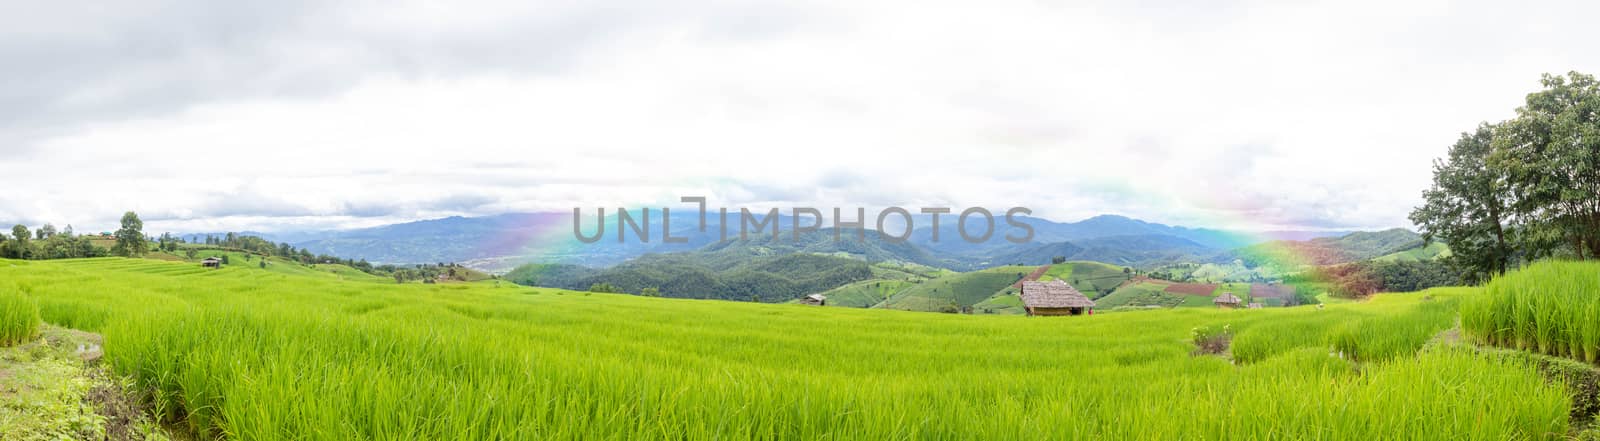 Beautiful Green Rice Field With Blue Sky And Rainbow In The Moun by rakoptonLPN